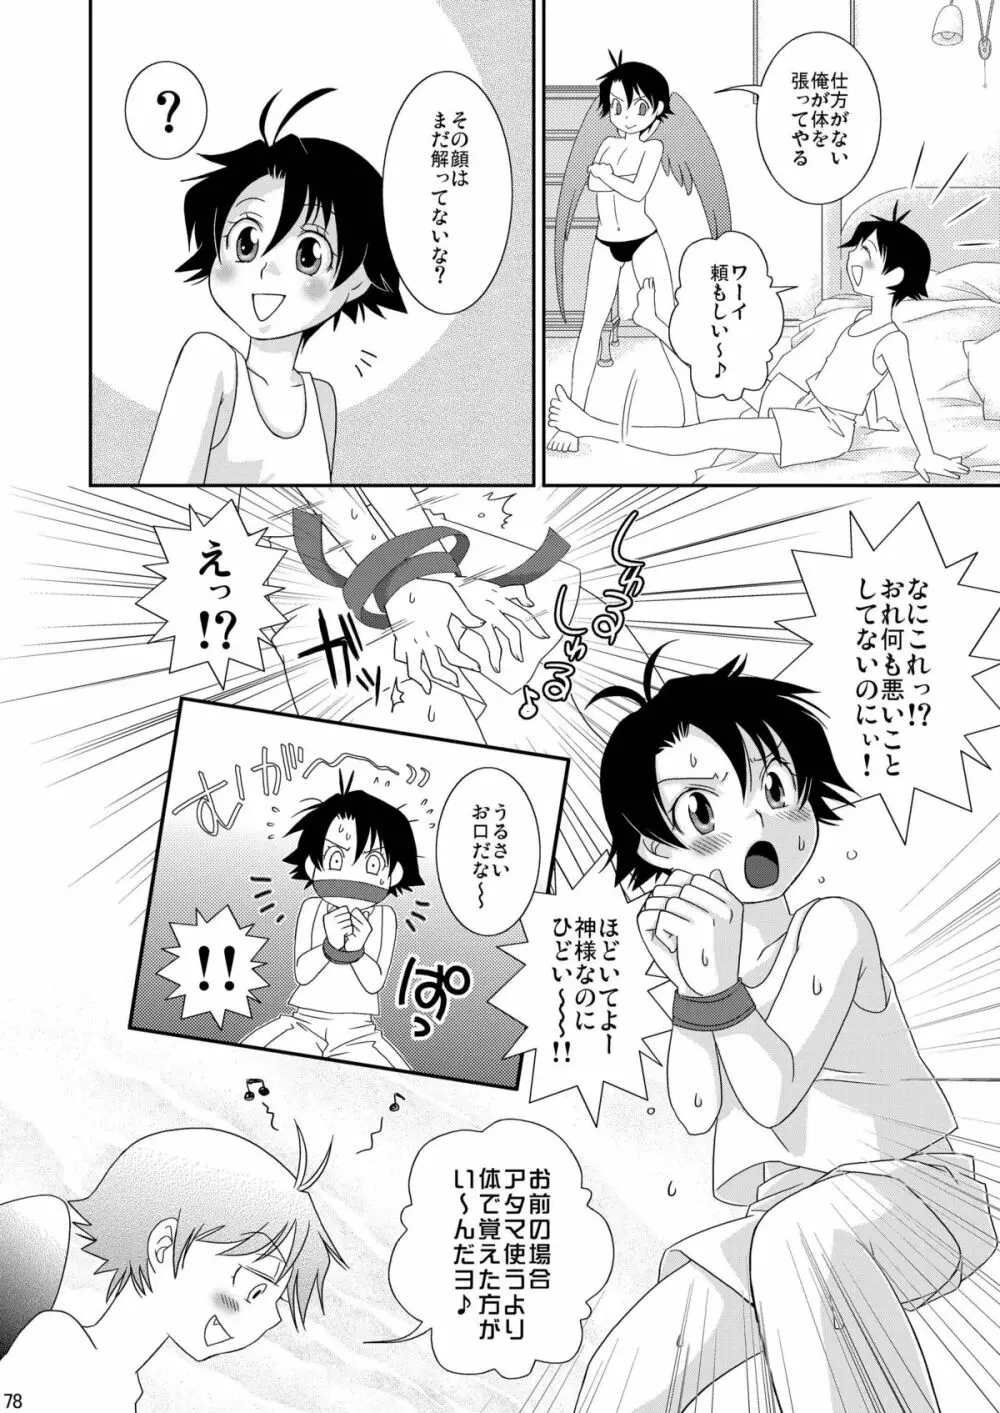 Re: ぷれい2 - page78